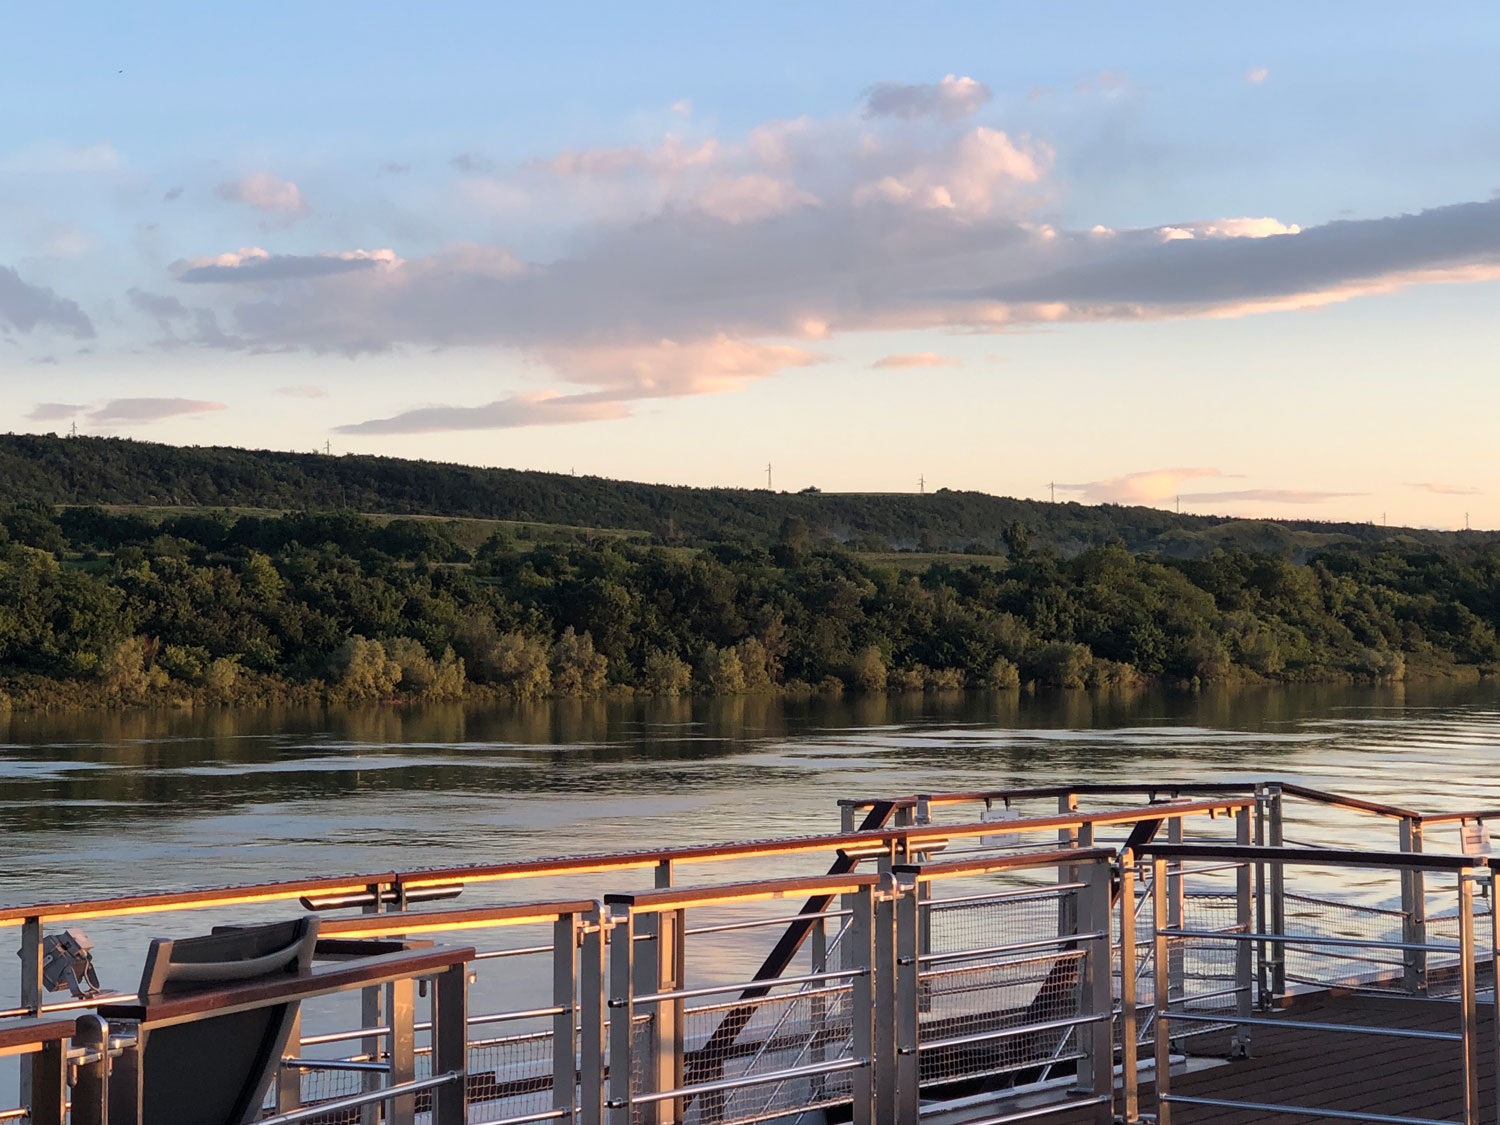 Danube water levels